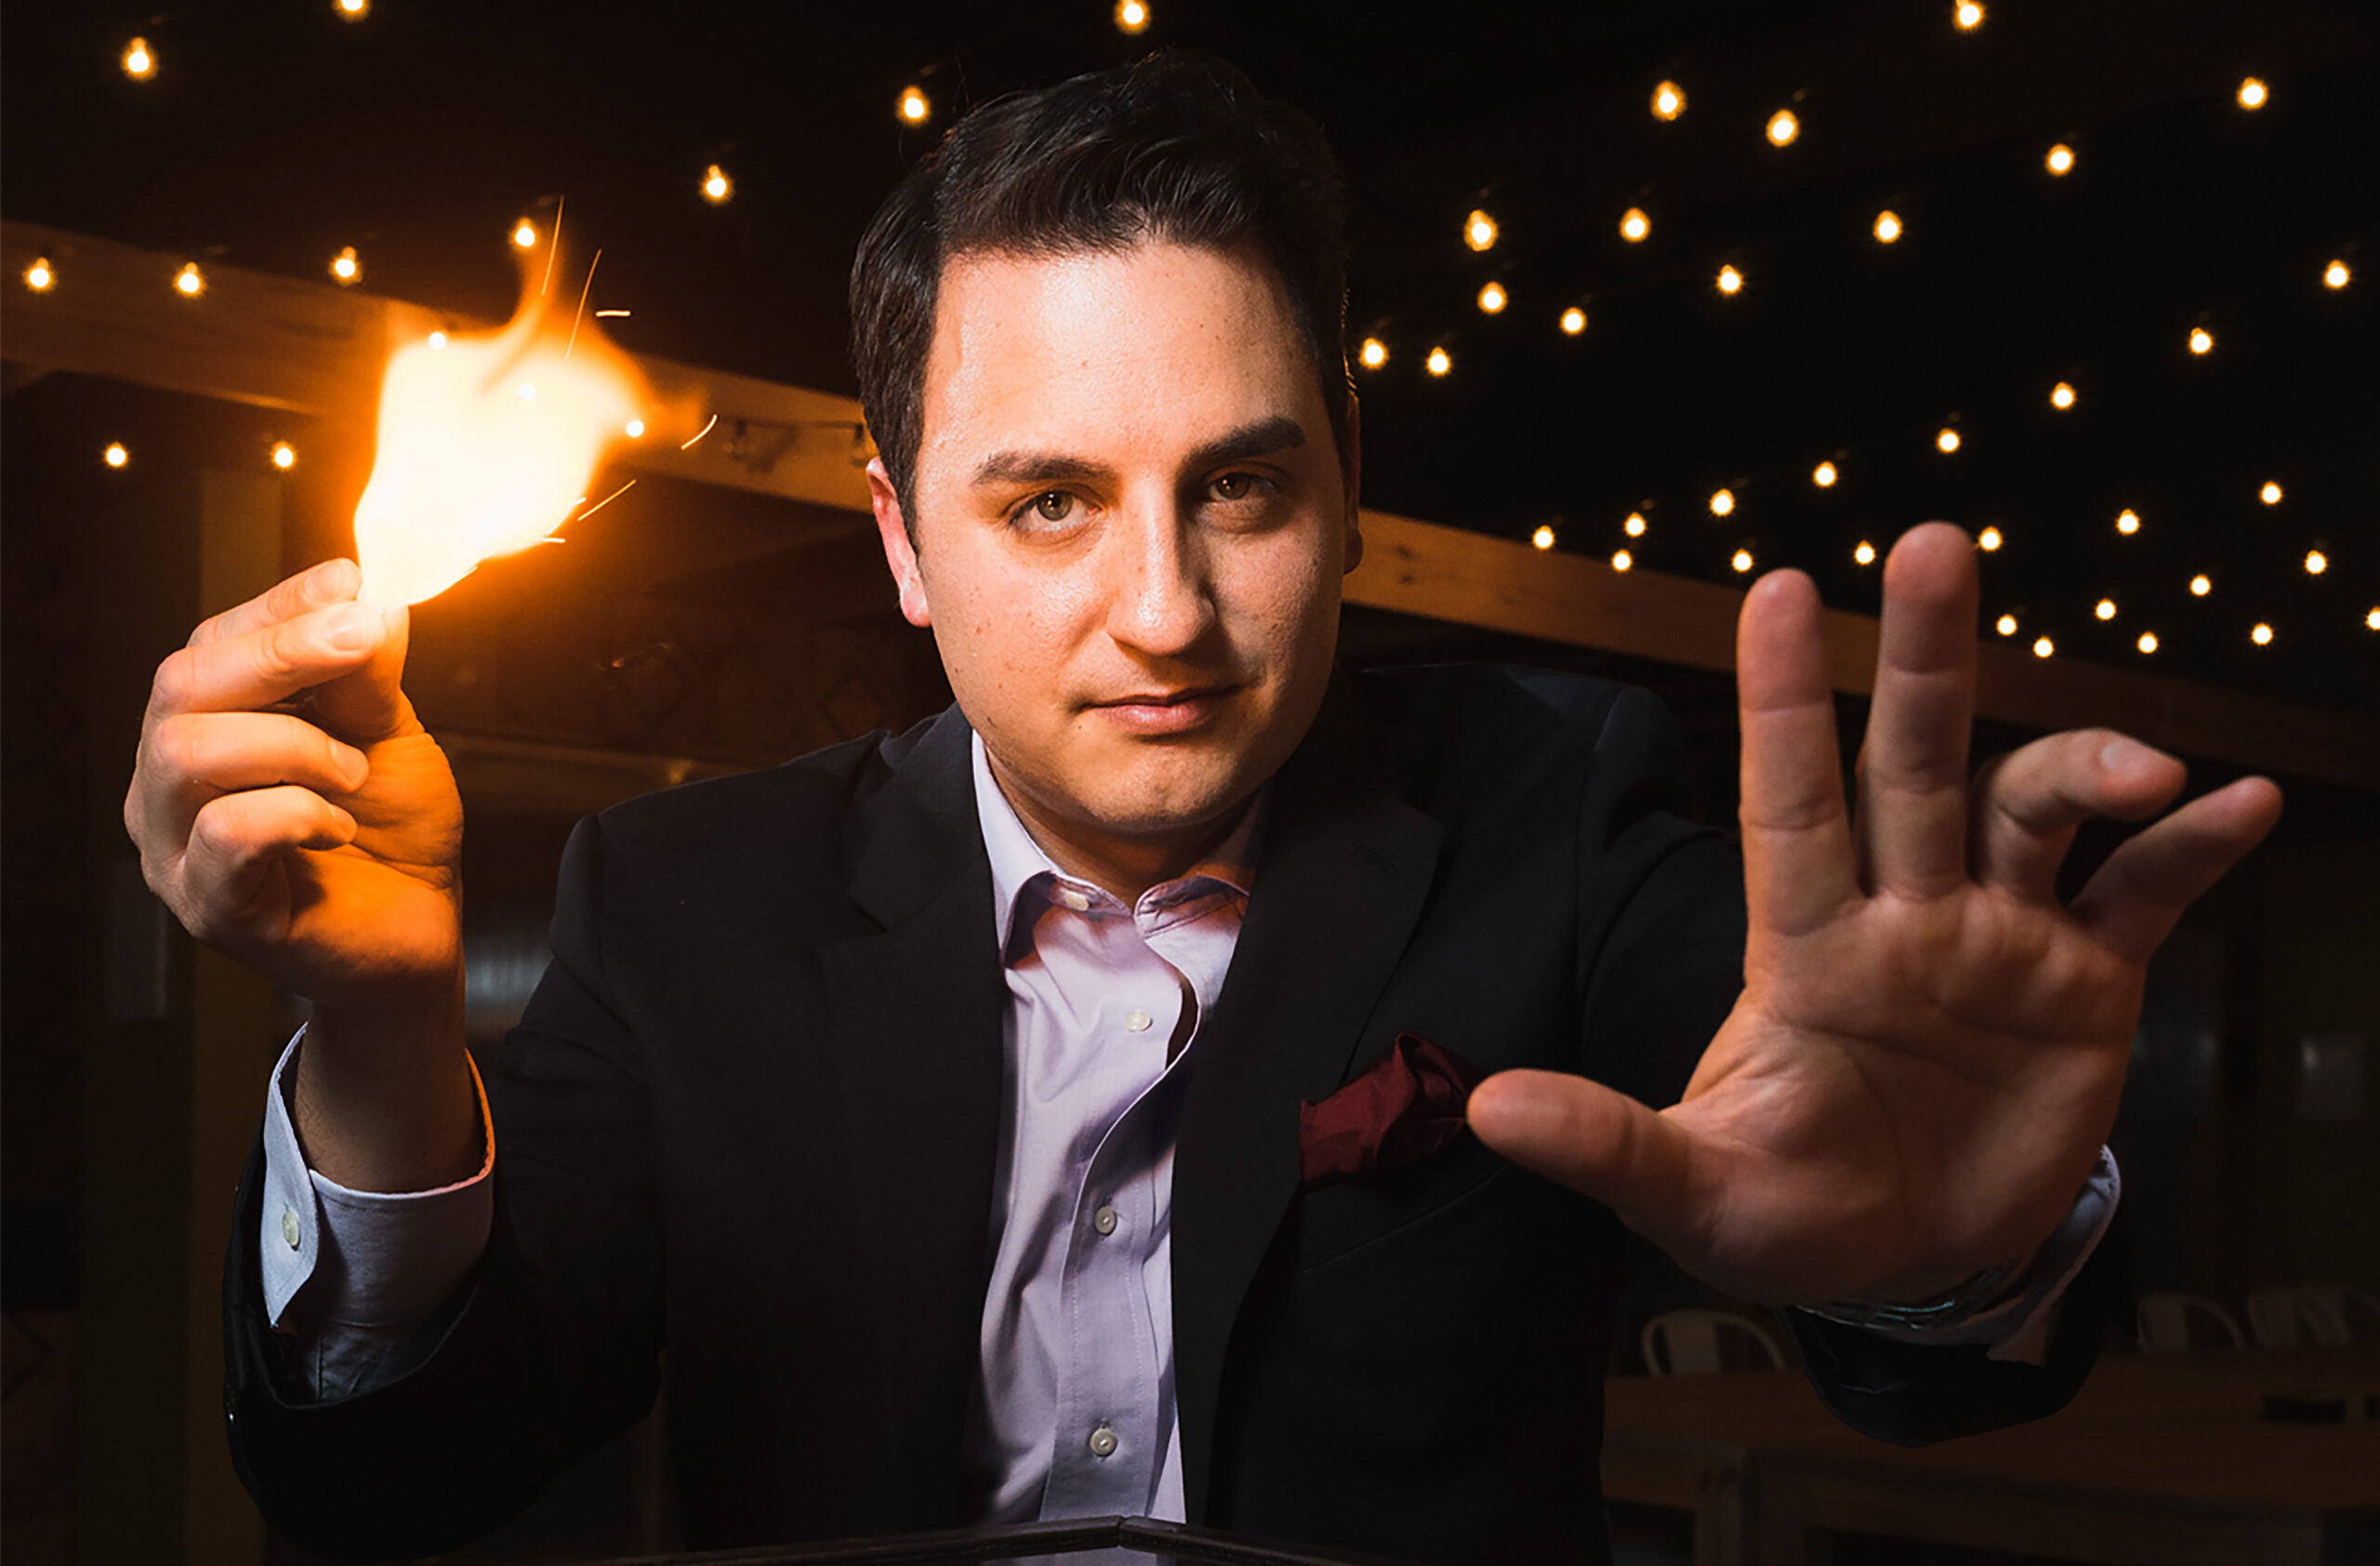 Corporate Magician David Ranalli is also a motivational speaker in Chicago, Indianapolis, Orlando, Las Vegas, New York